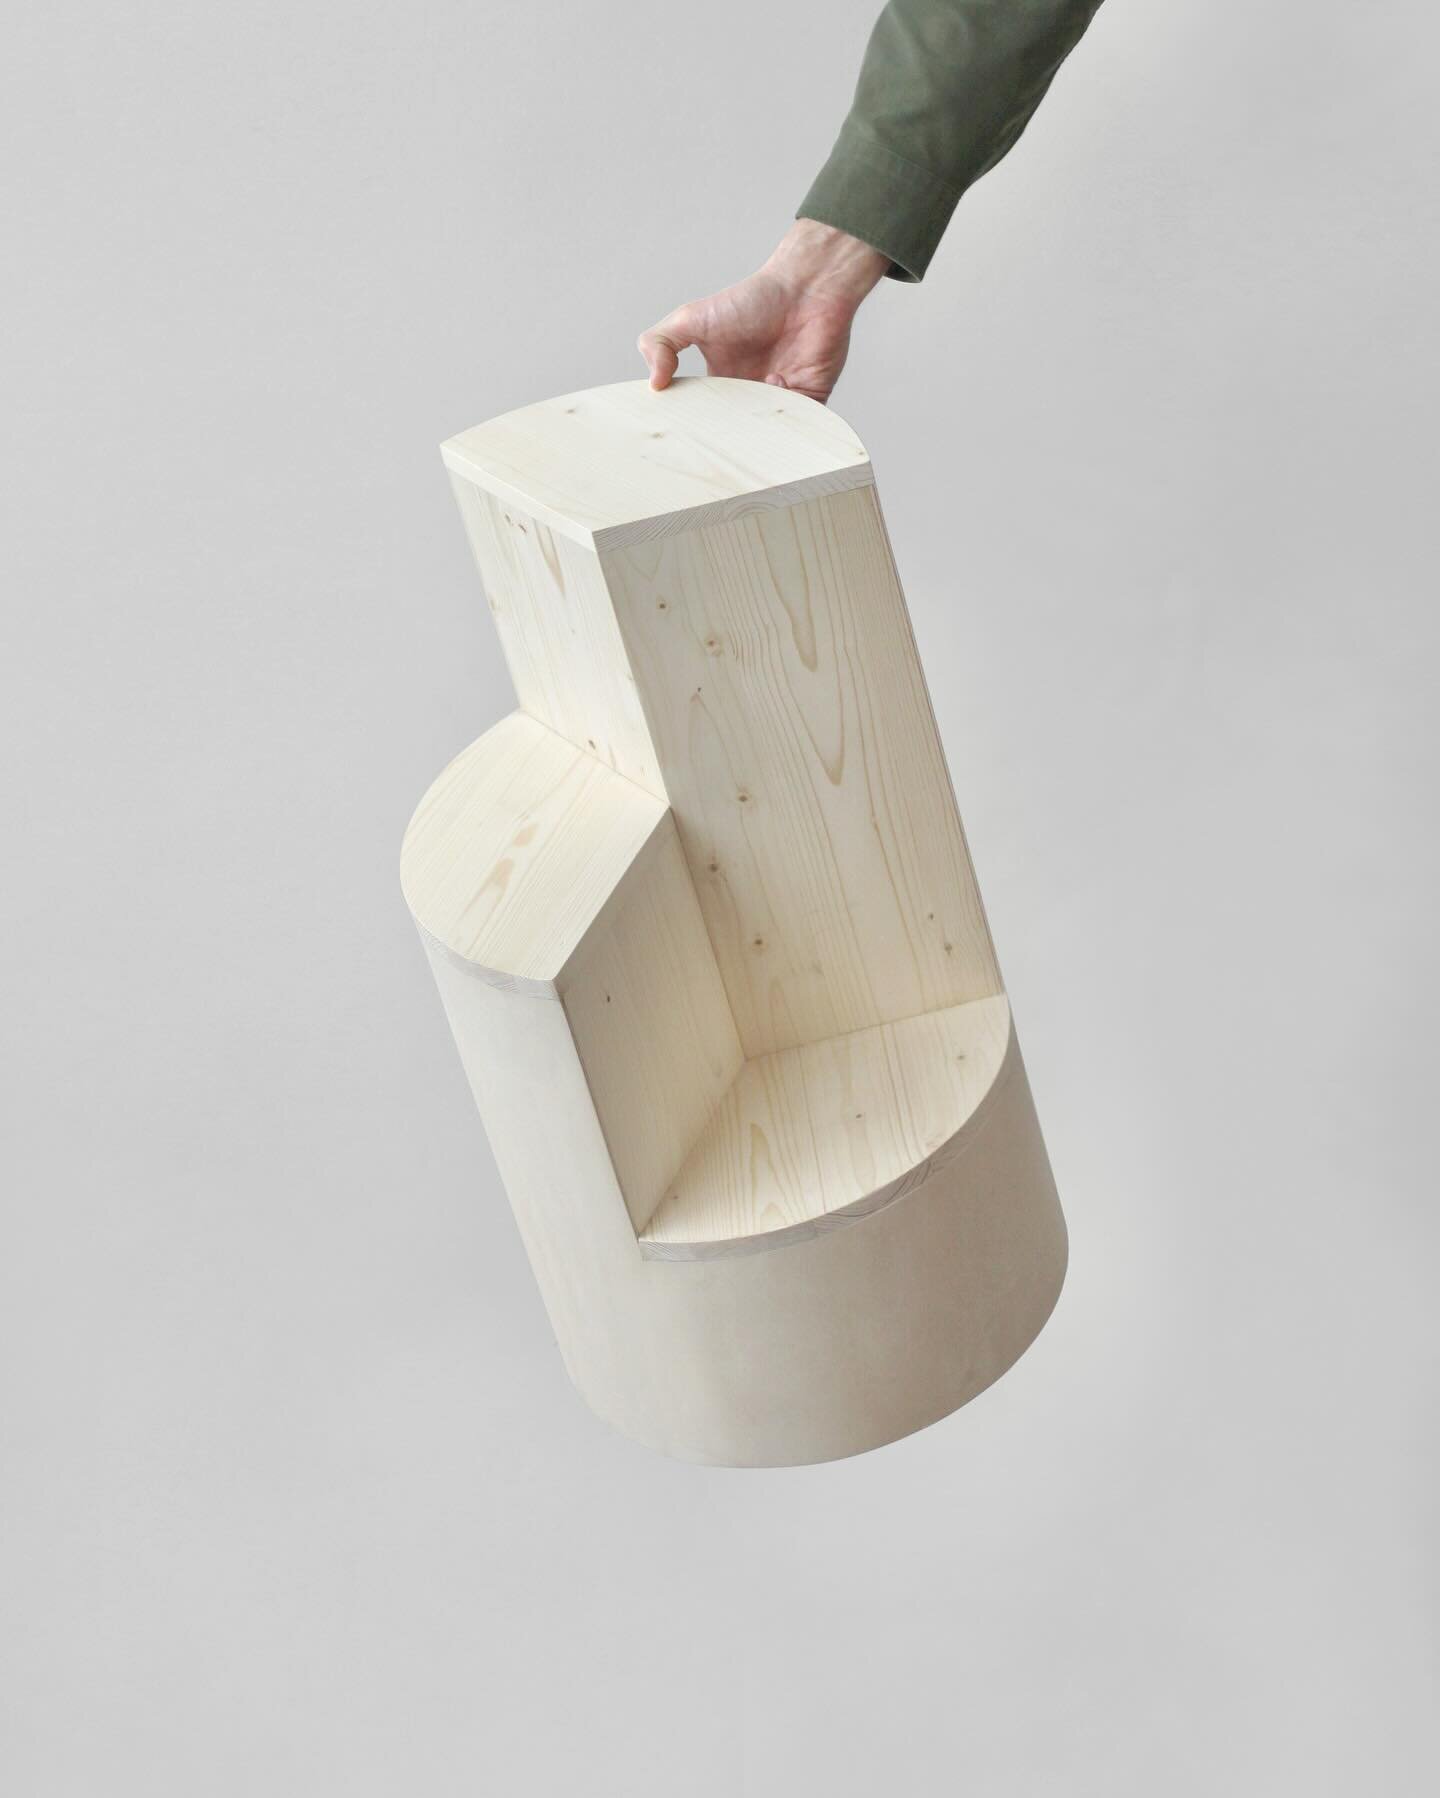 Three-step stool #08 

#stool #stepstool #woodenstool #woodworking #furniture #handcrafted #furnituredesign #productdesign #design #ac_al_studio